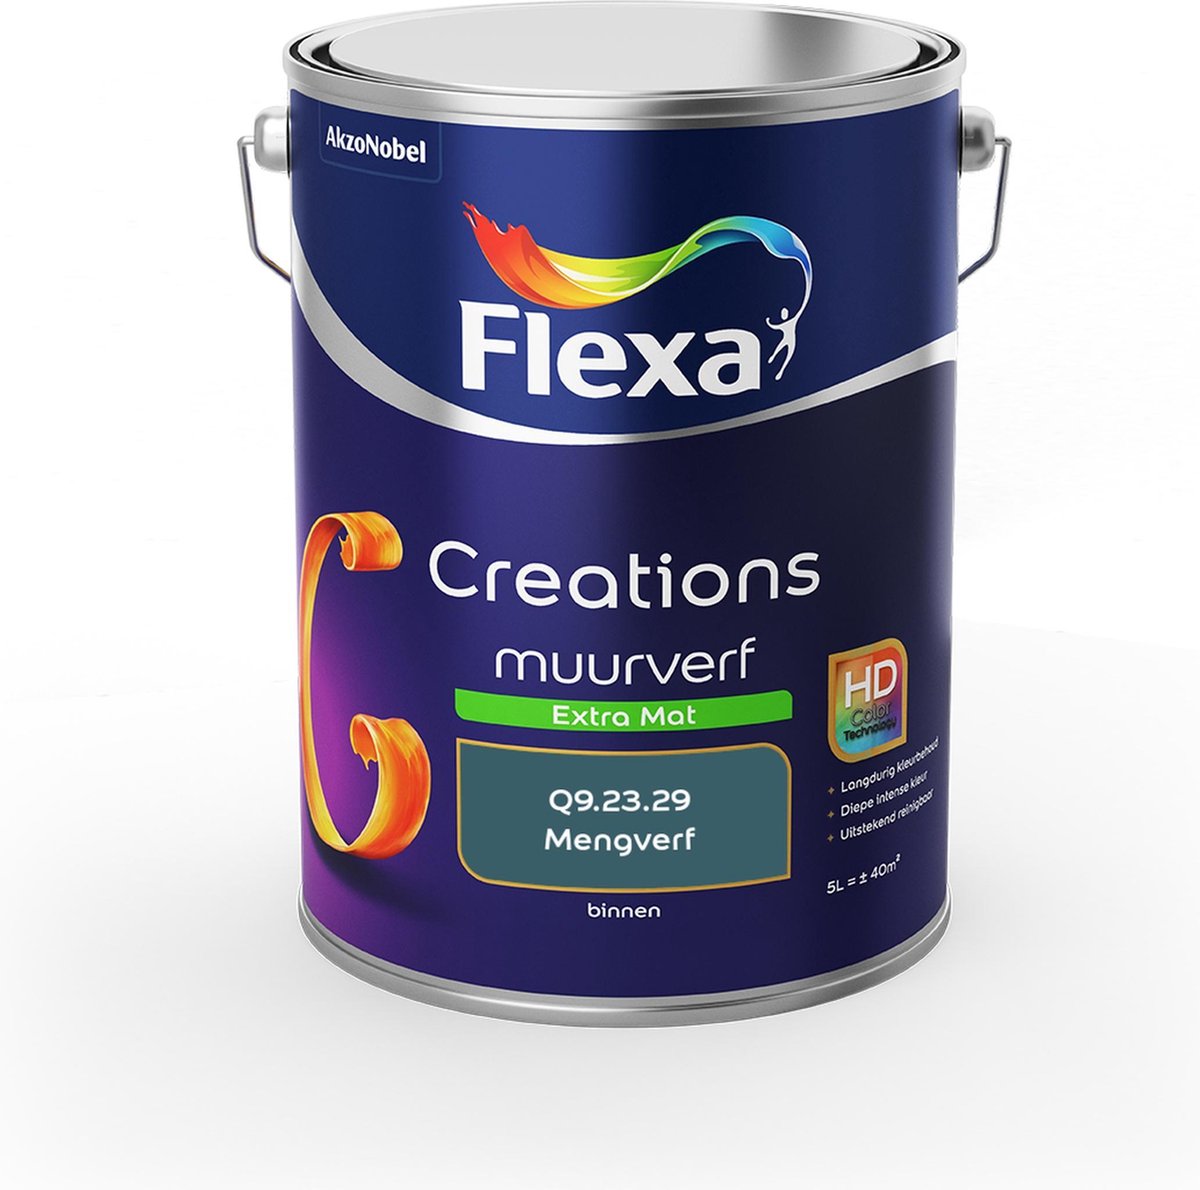 Flexa Creations Muurverf - Extra Mat - Colorfutures 2019 - Q9.23.29 - 5 liter